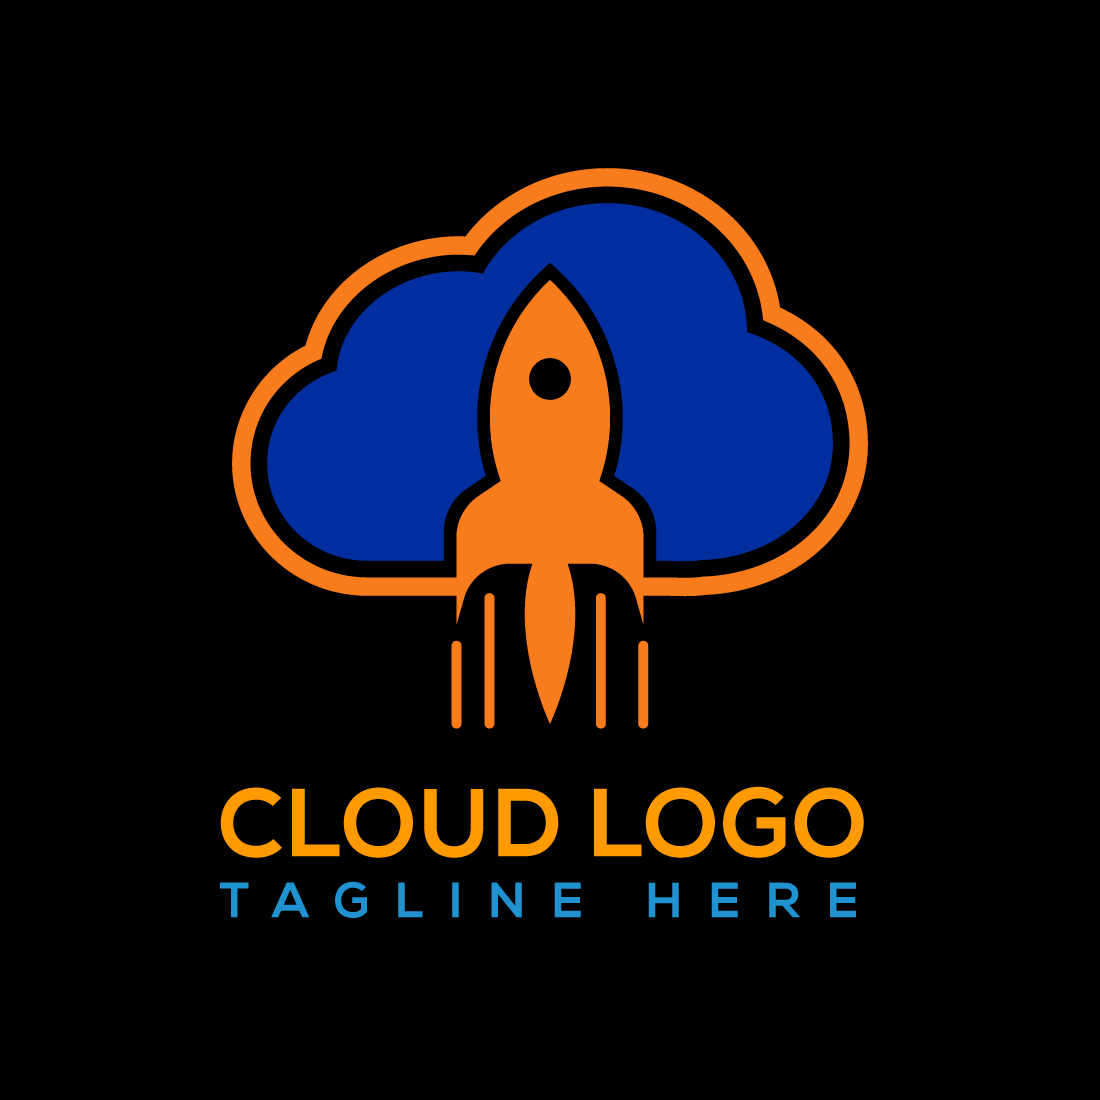 Tech Provider Logo Design cover image.